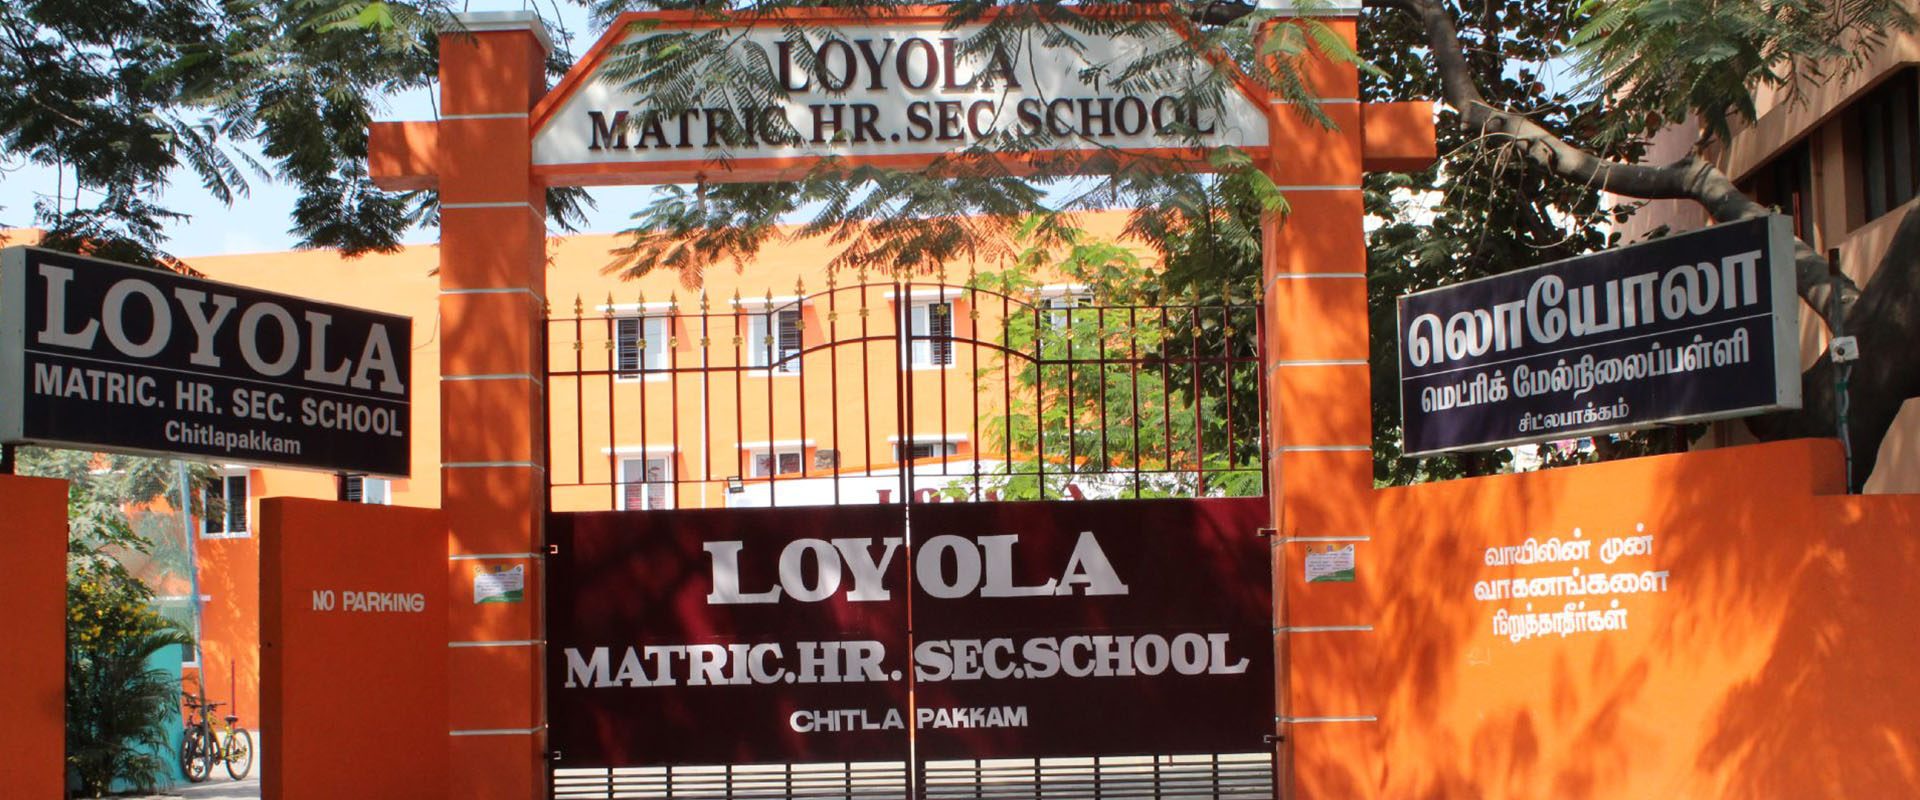 Loyola Metriculation Higher Secondary